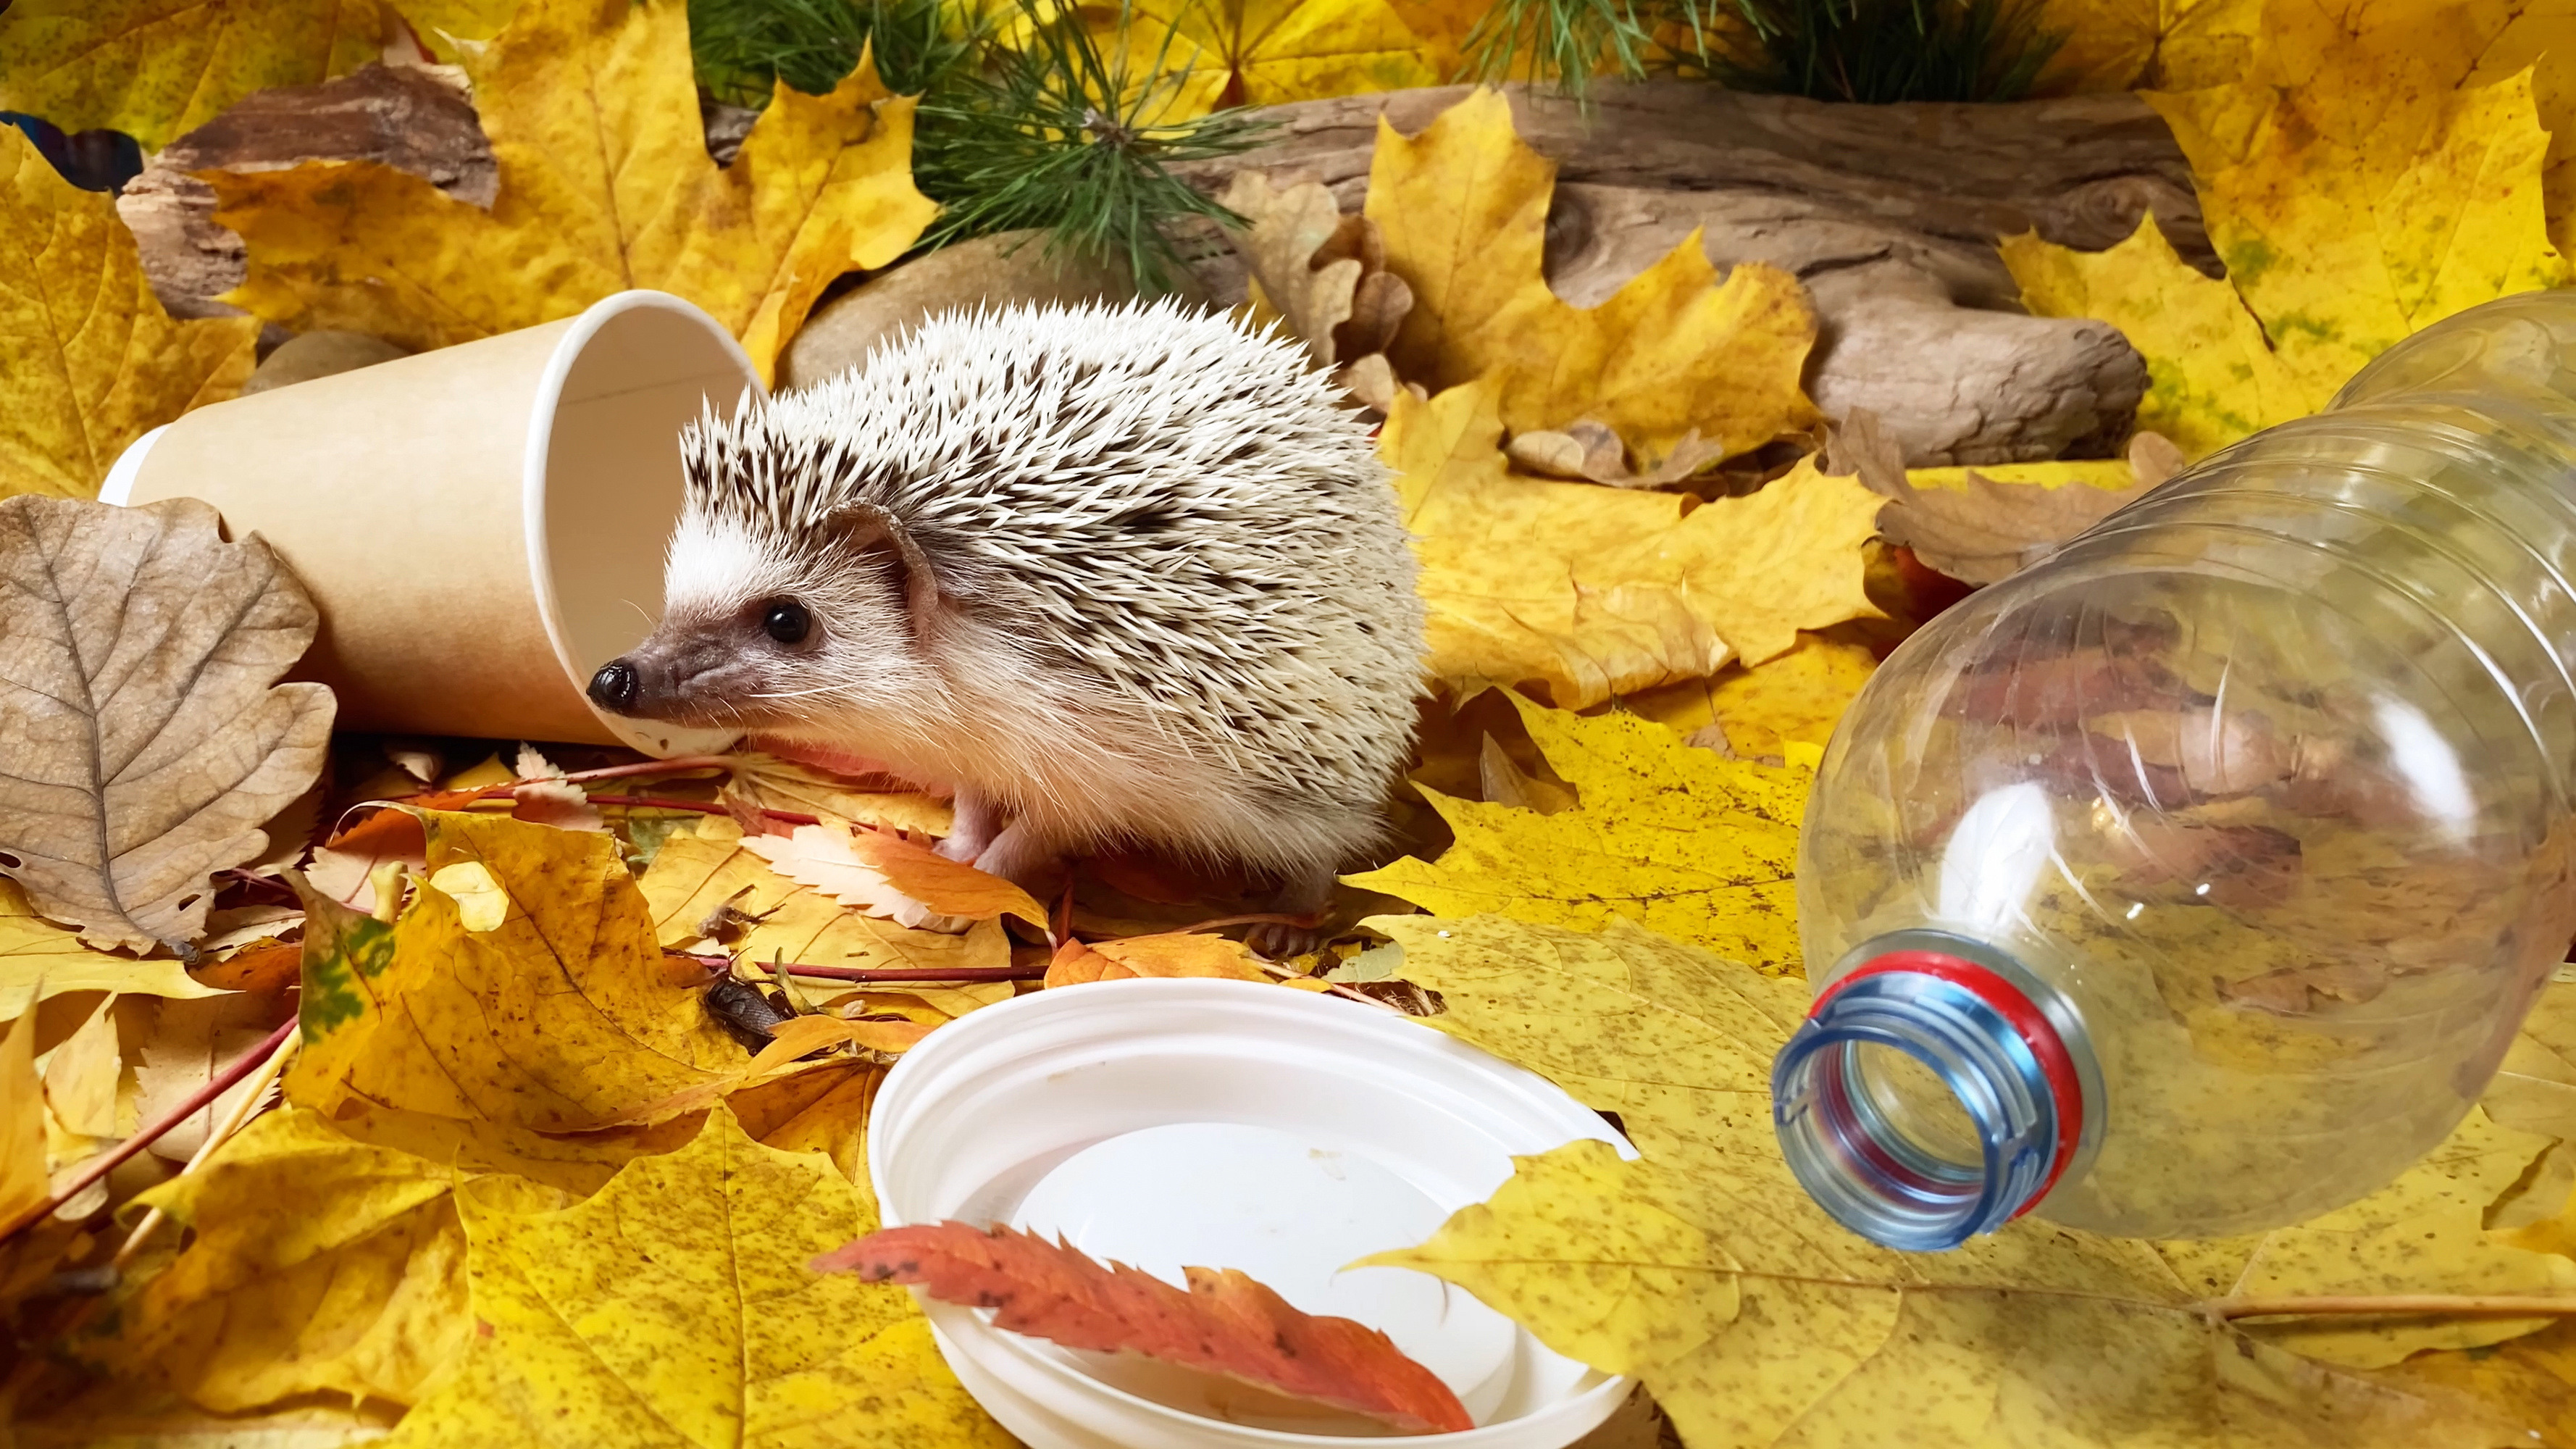 Hedgehog and litter